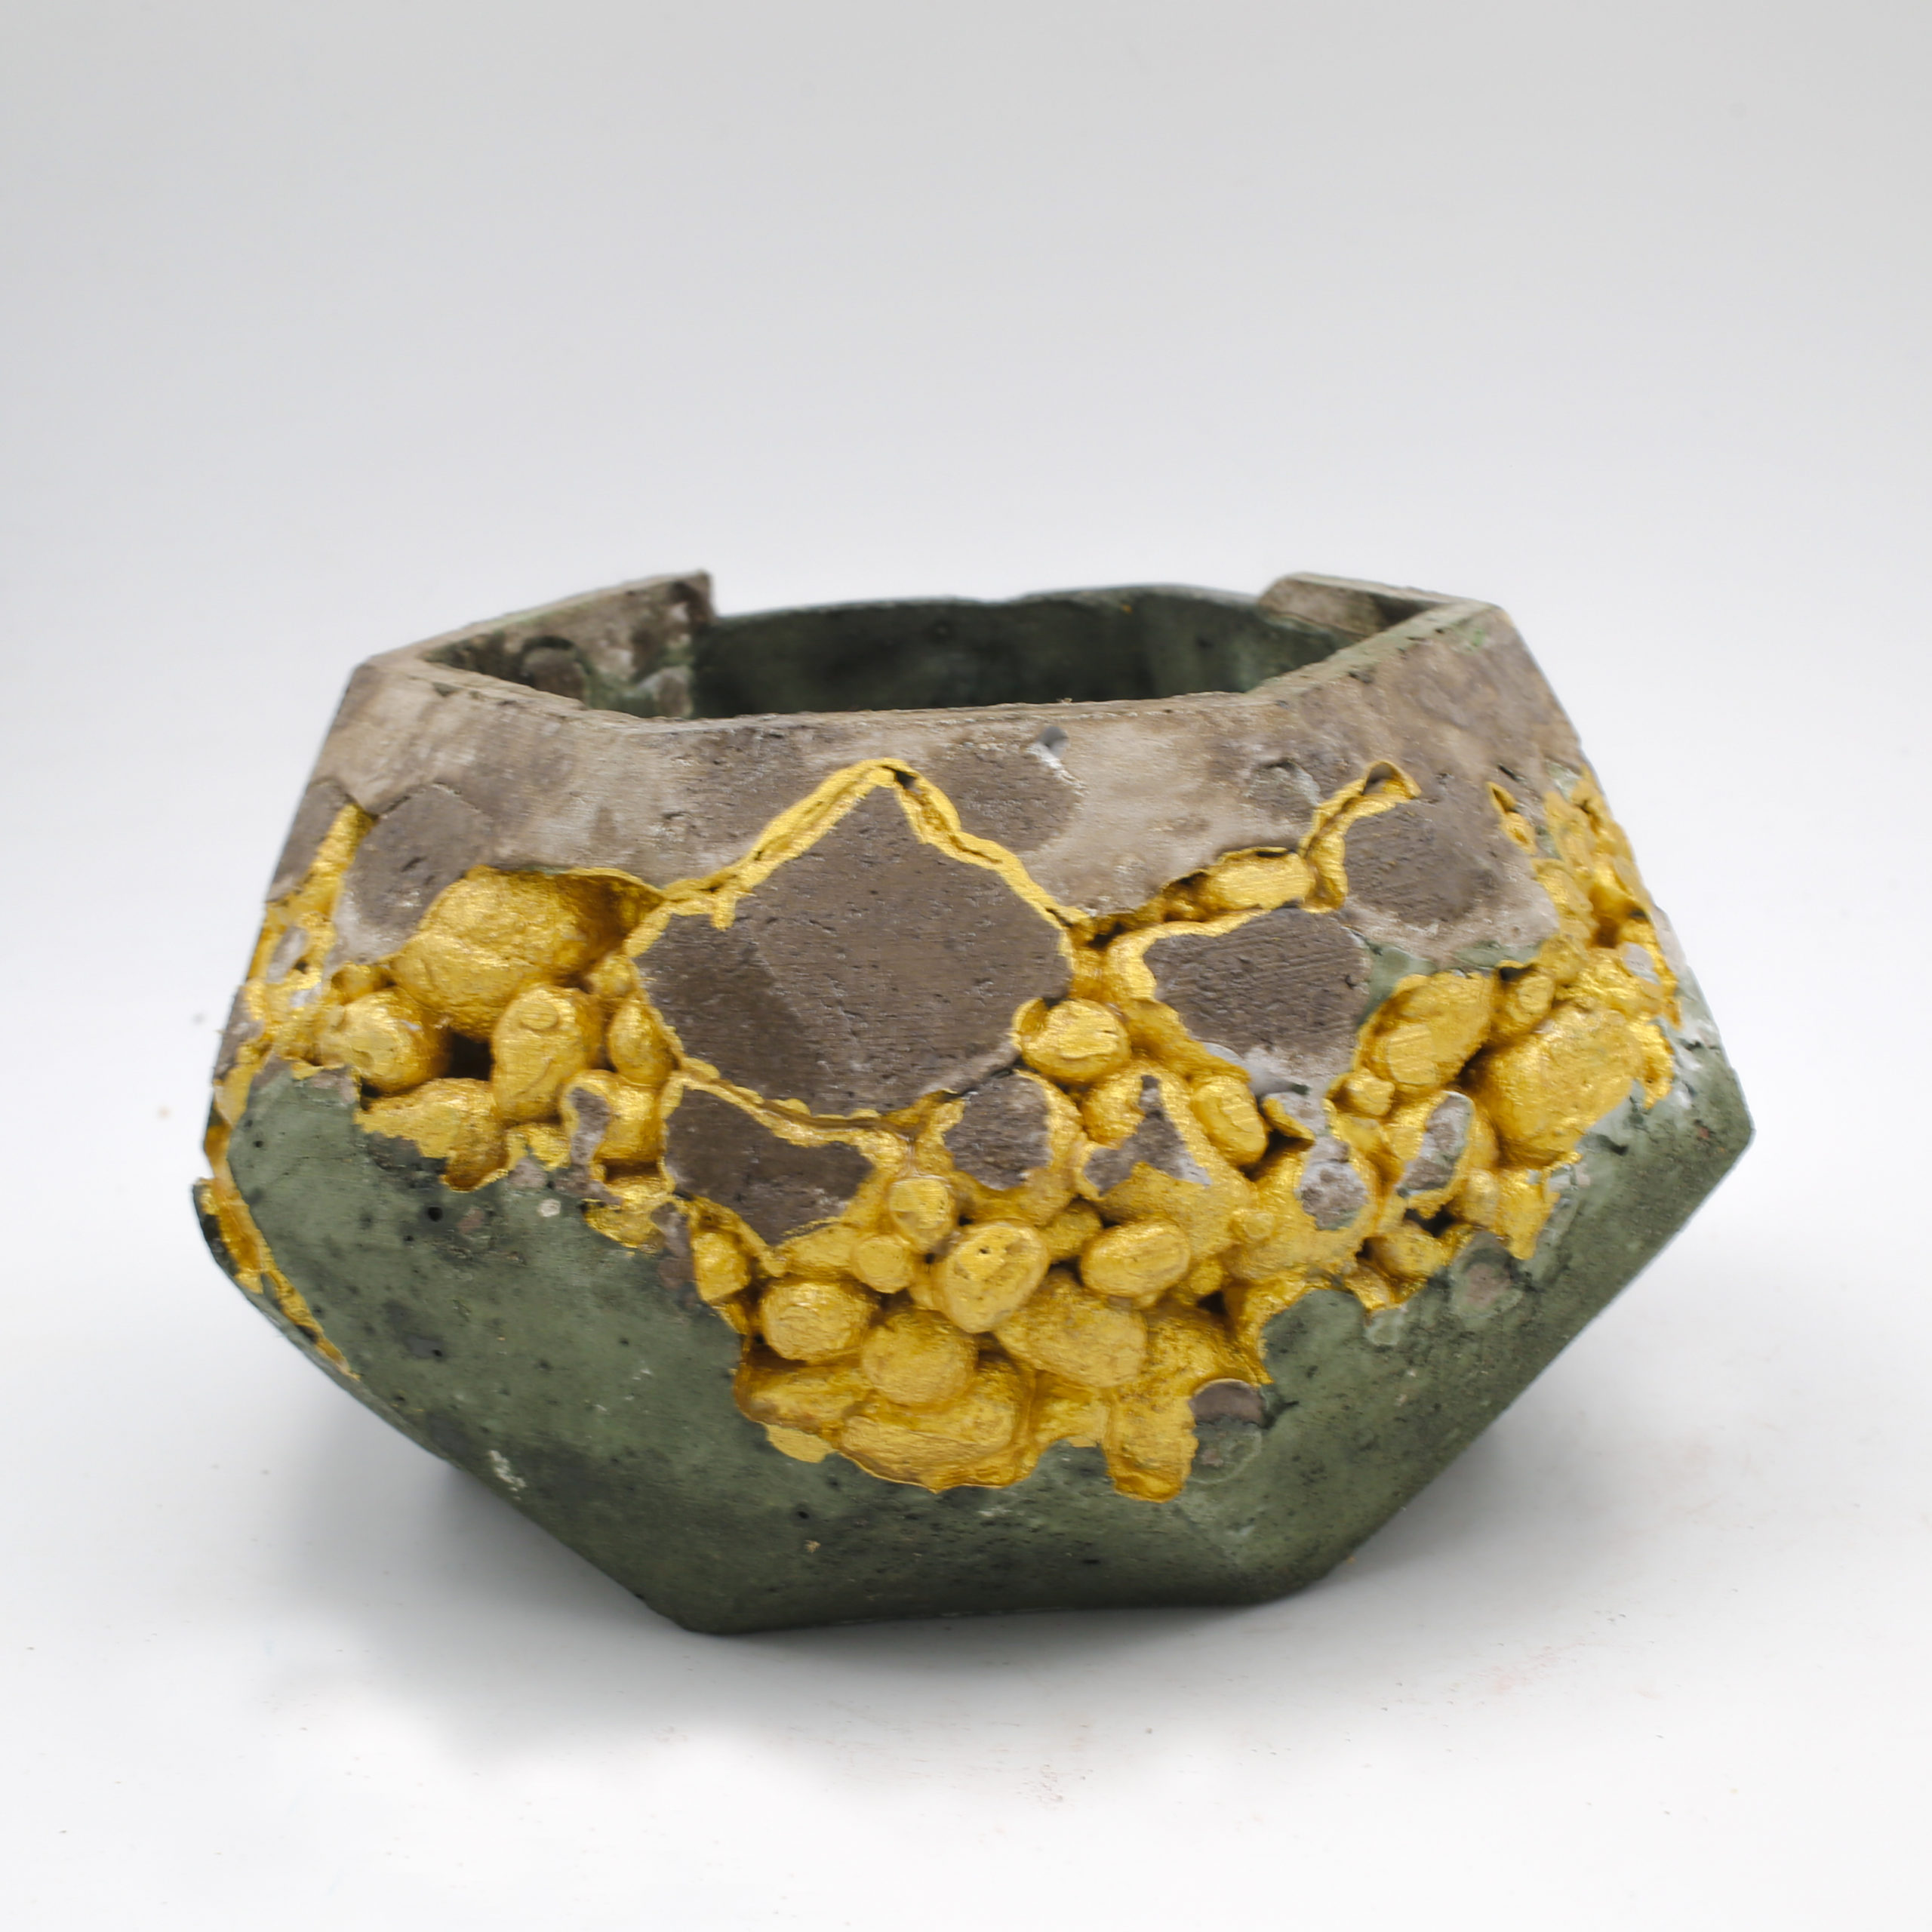 Concrete Planter pot kintsugi green with gold structure, octogonal shape, handmade in Berlin.